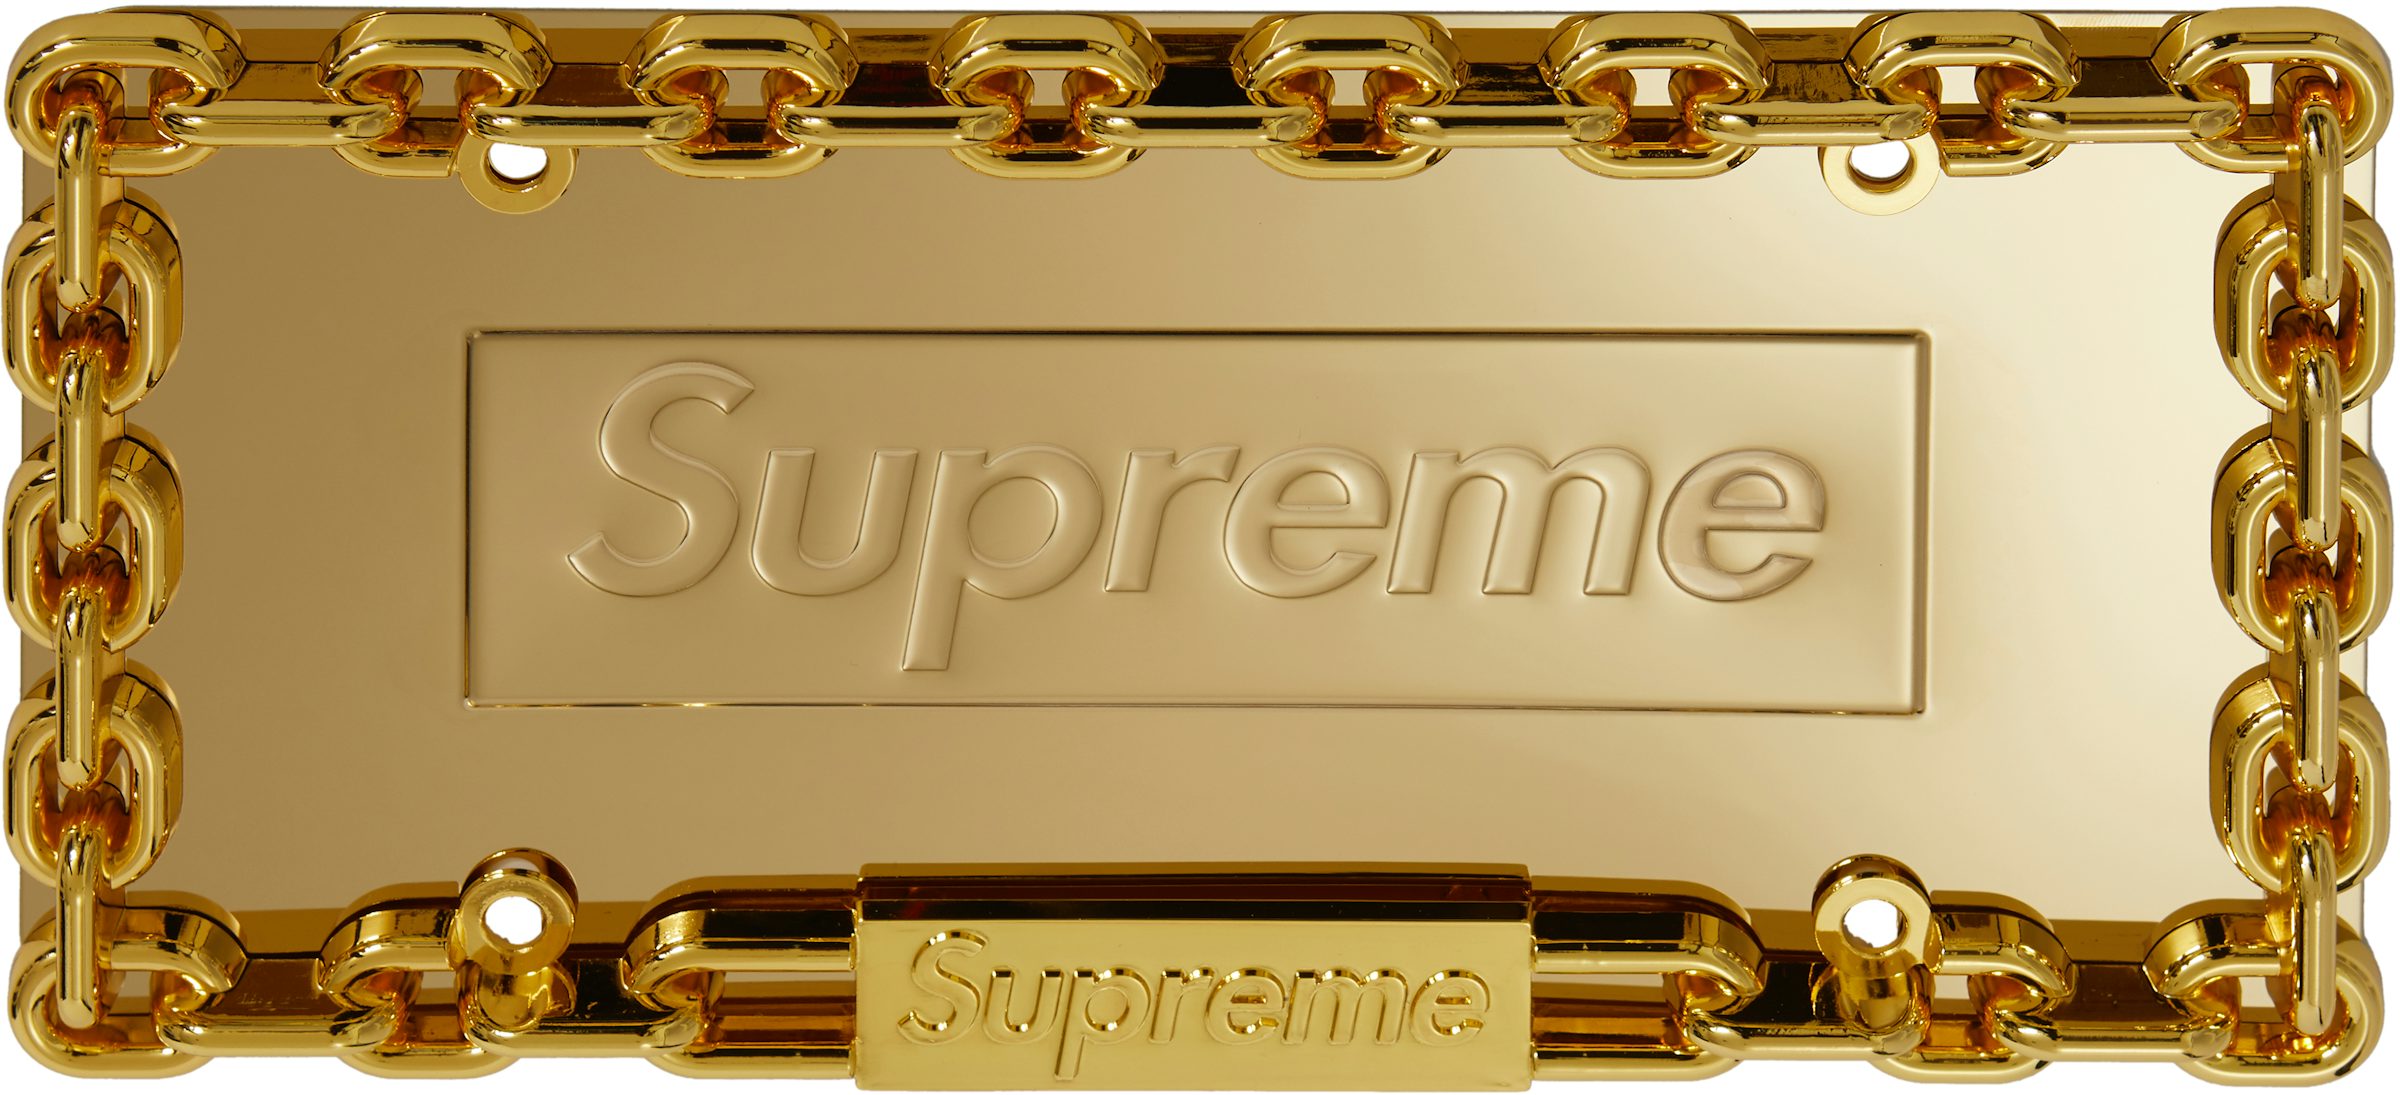 Supreme, Shoes, Supreme Vans Metal Plate Edition